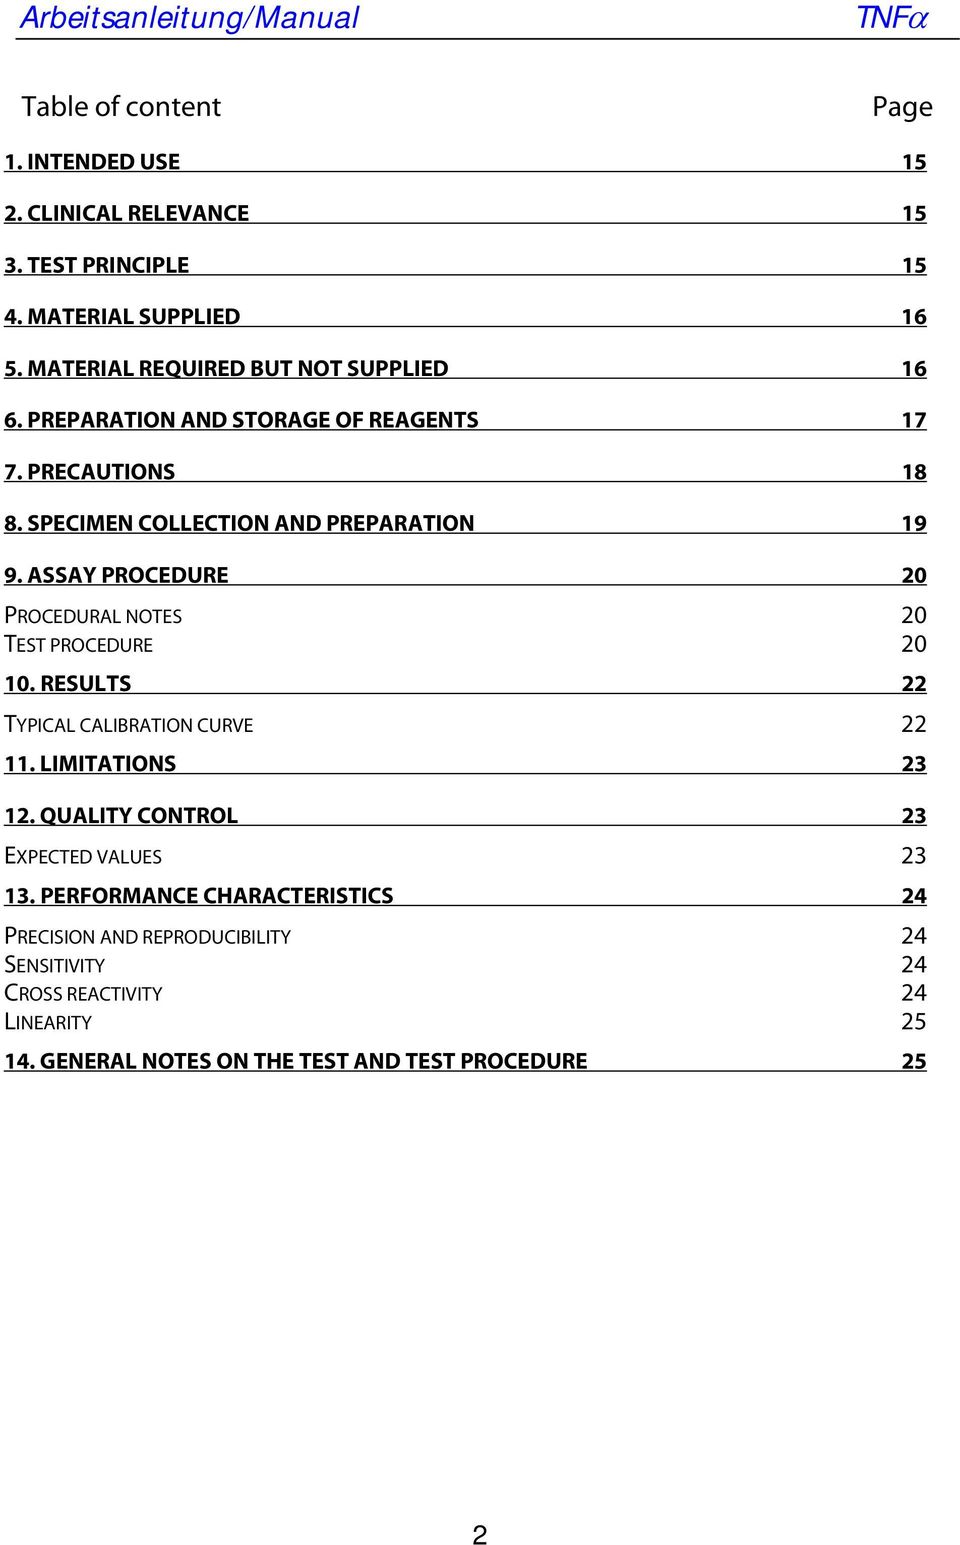 ASSAY PROCEDURE 20 PROCEDURAL NOTES 20 TEST PROCEDURE 20 10. RESULTS 22 TYPICAL CALIBRATION CURVE 22 11. LIMITATIONS 23 12.